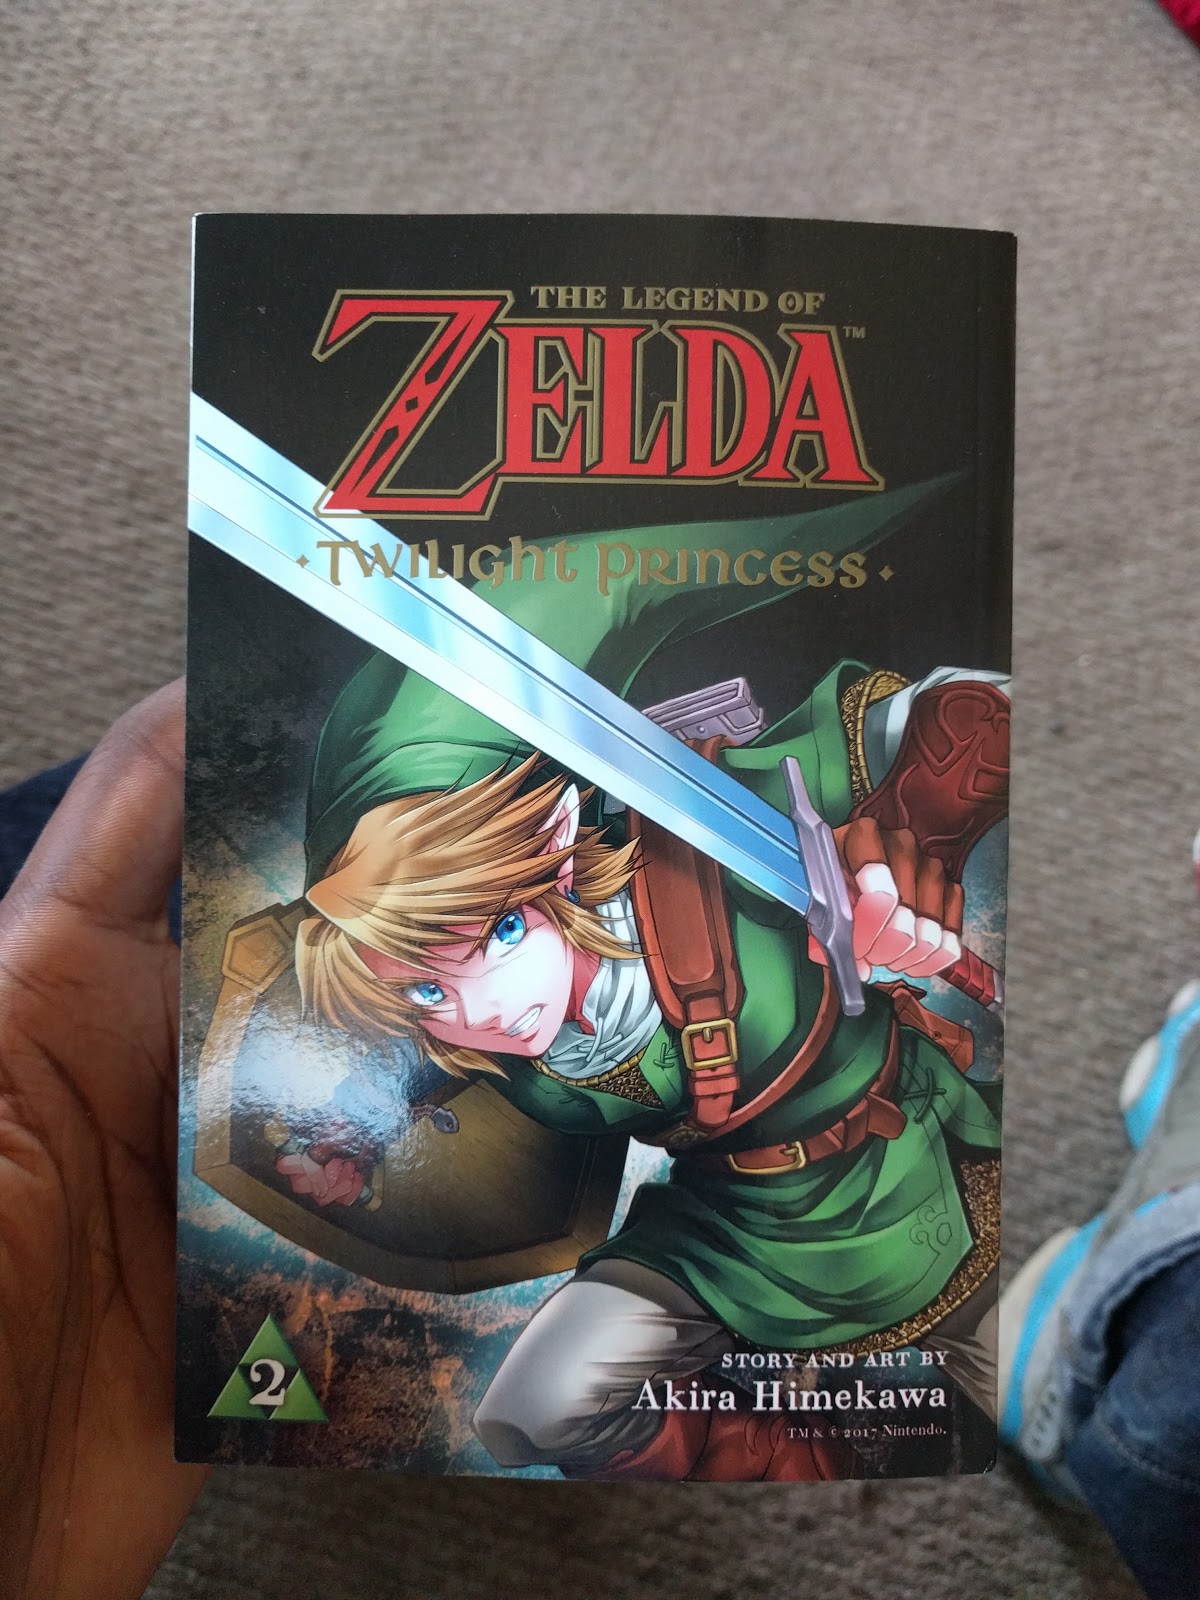 Zelda Manga Returns After 7-Year Hiatus - IGN